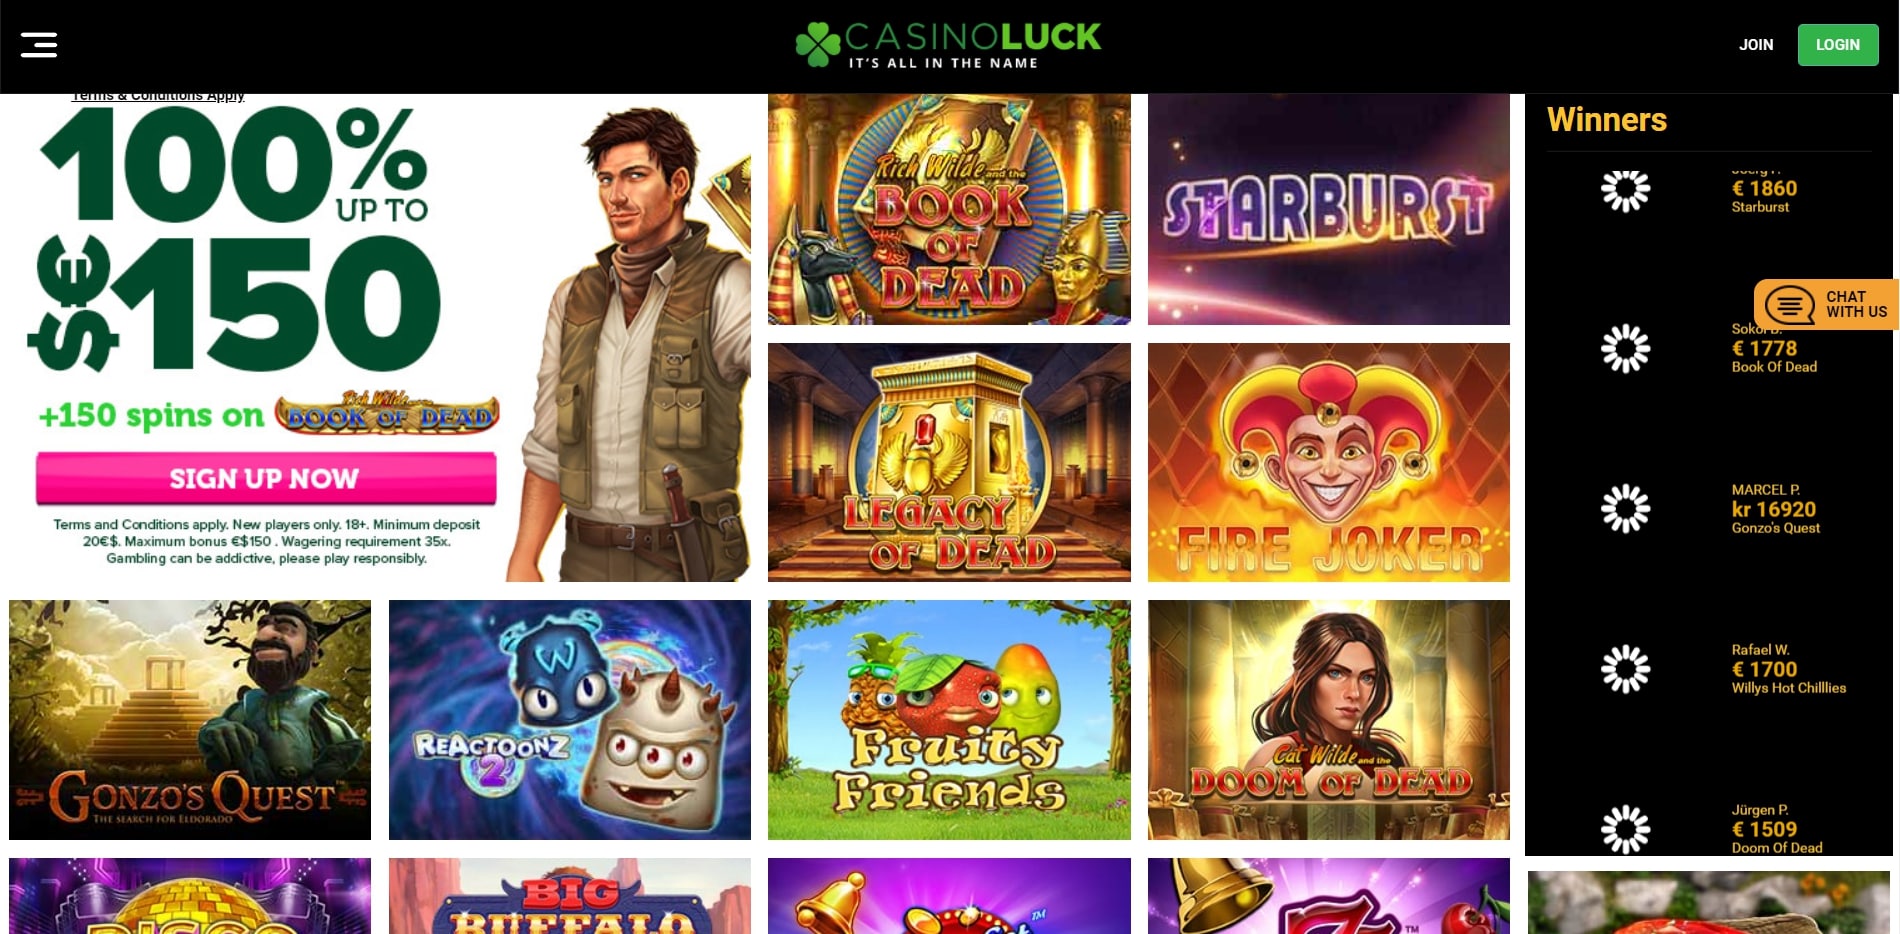 CasinoLuck Live Dealer Games